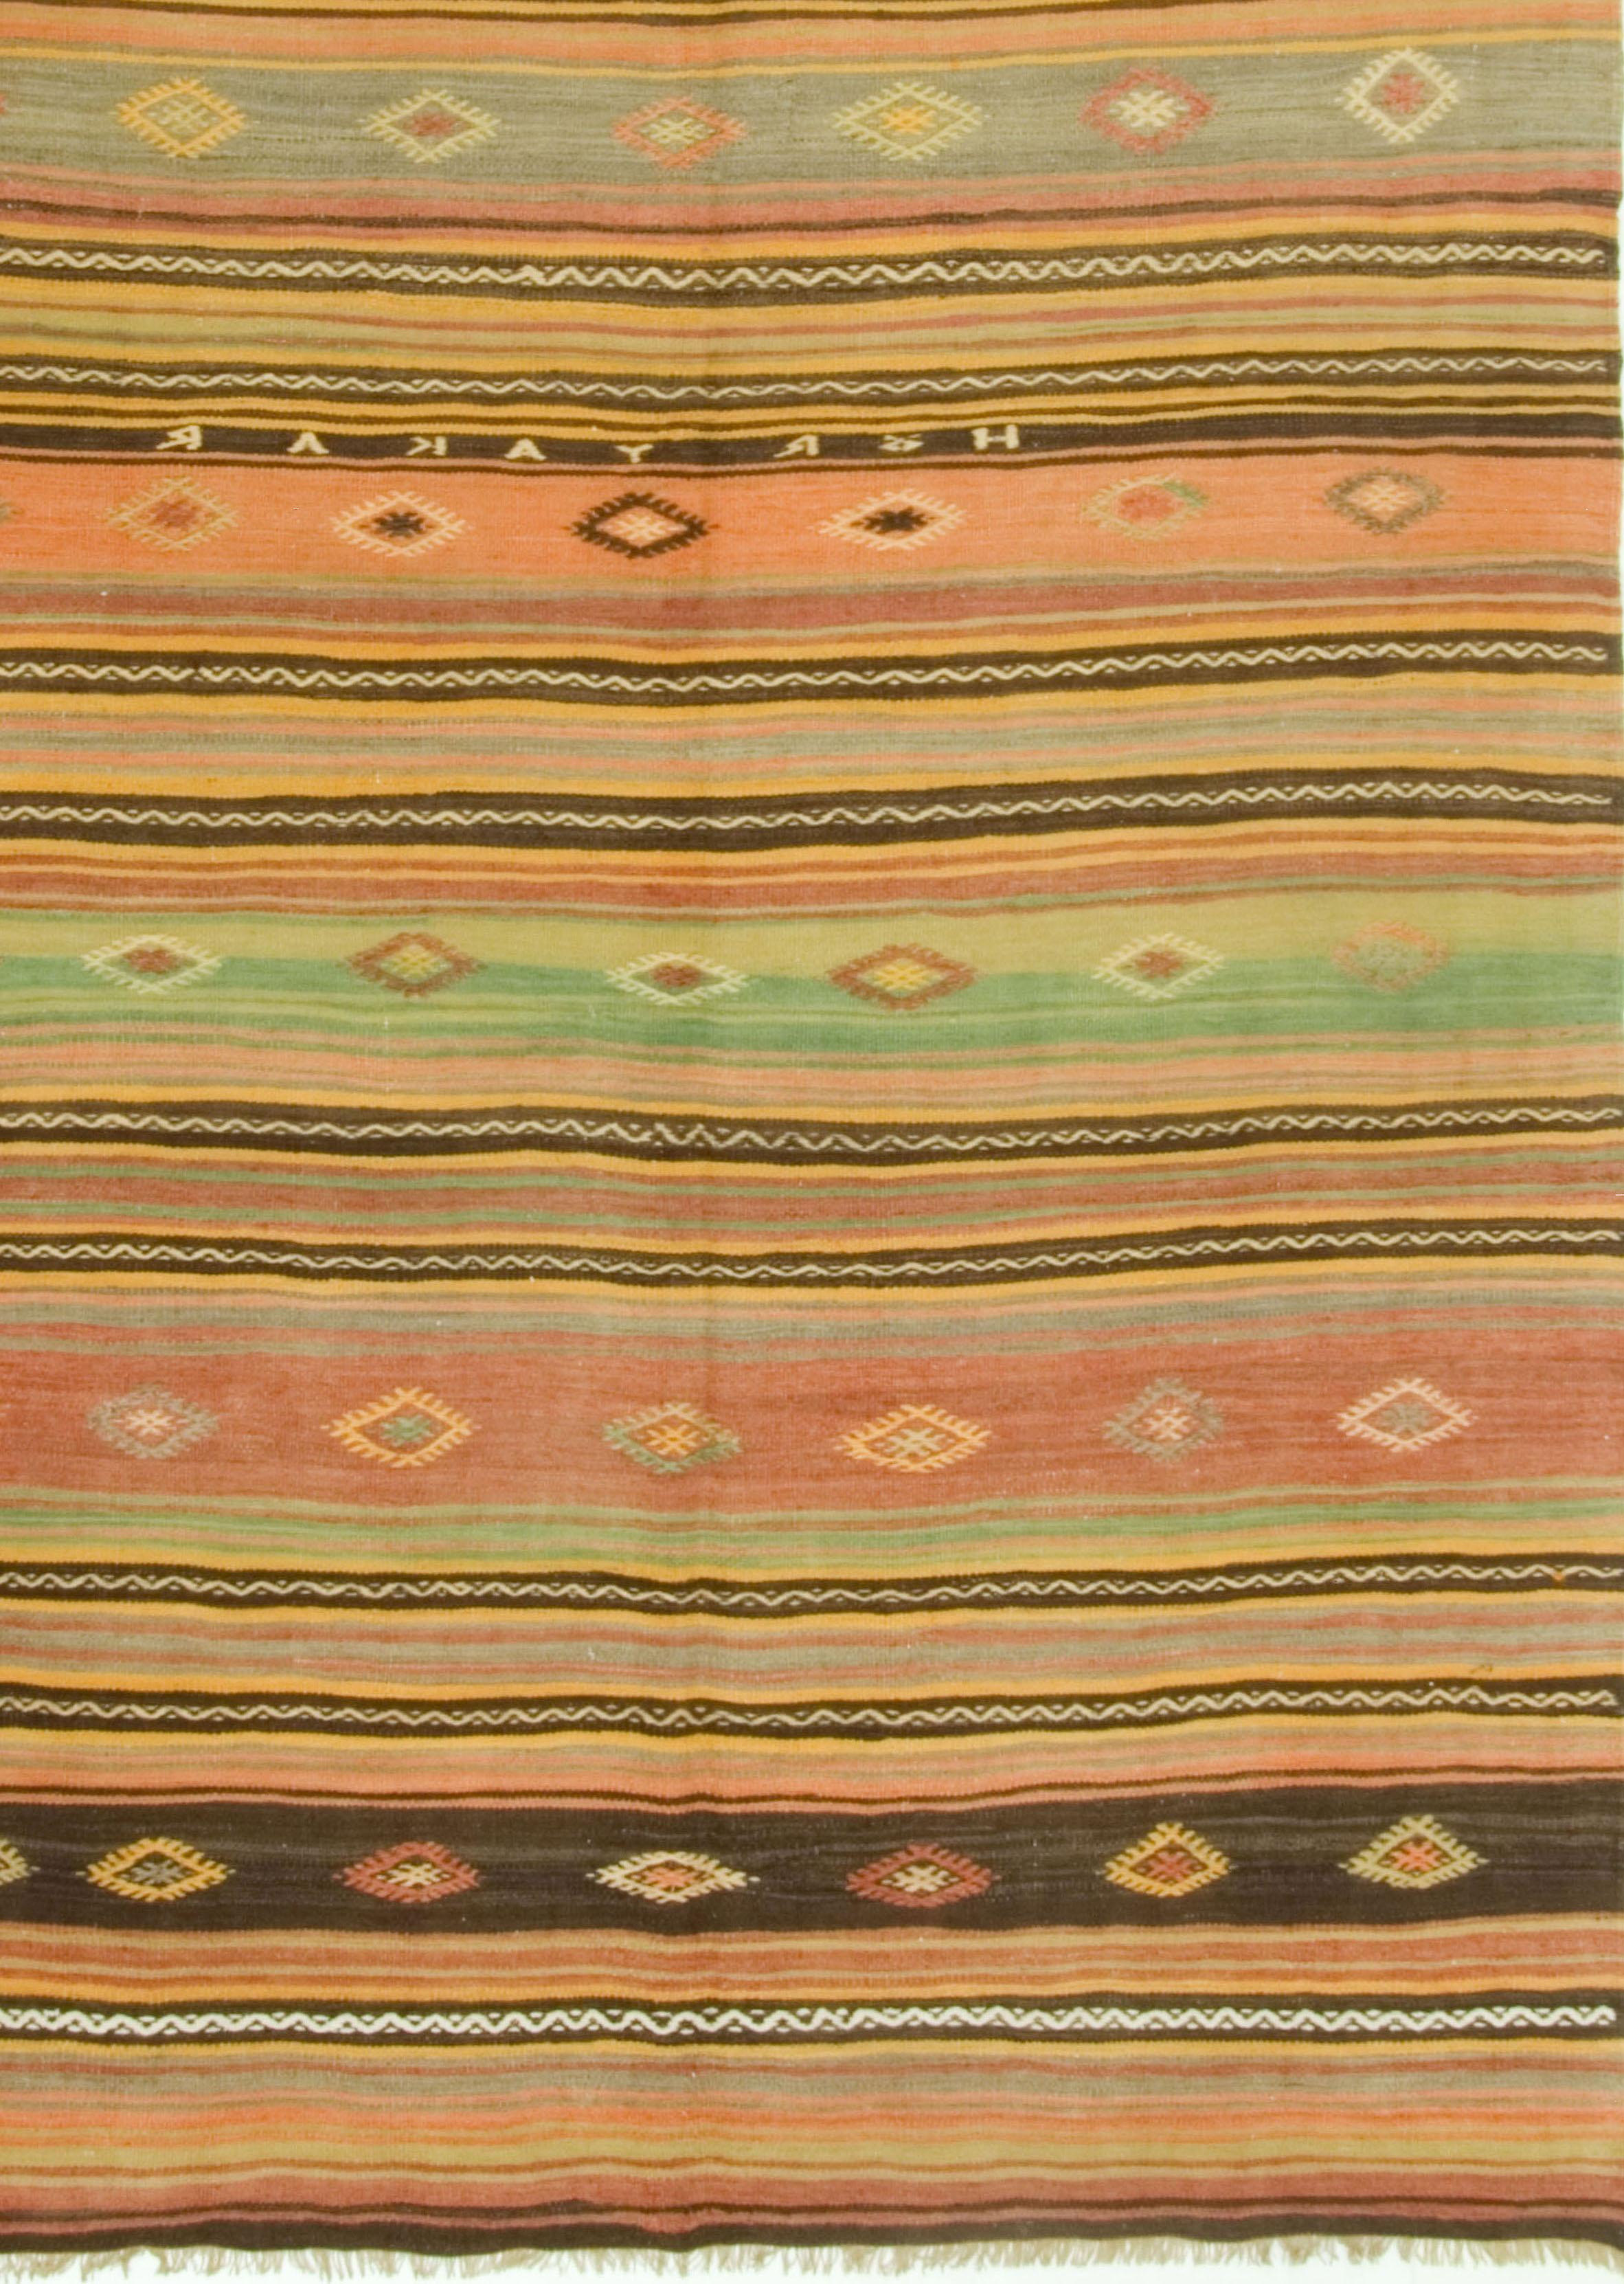 Hand-Woven Vintage Turkish Kilim Rug Carpet  5'4 x 9'4 For Sale